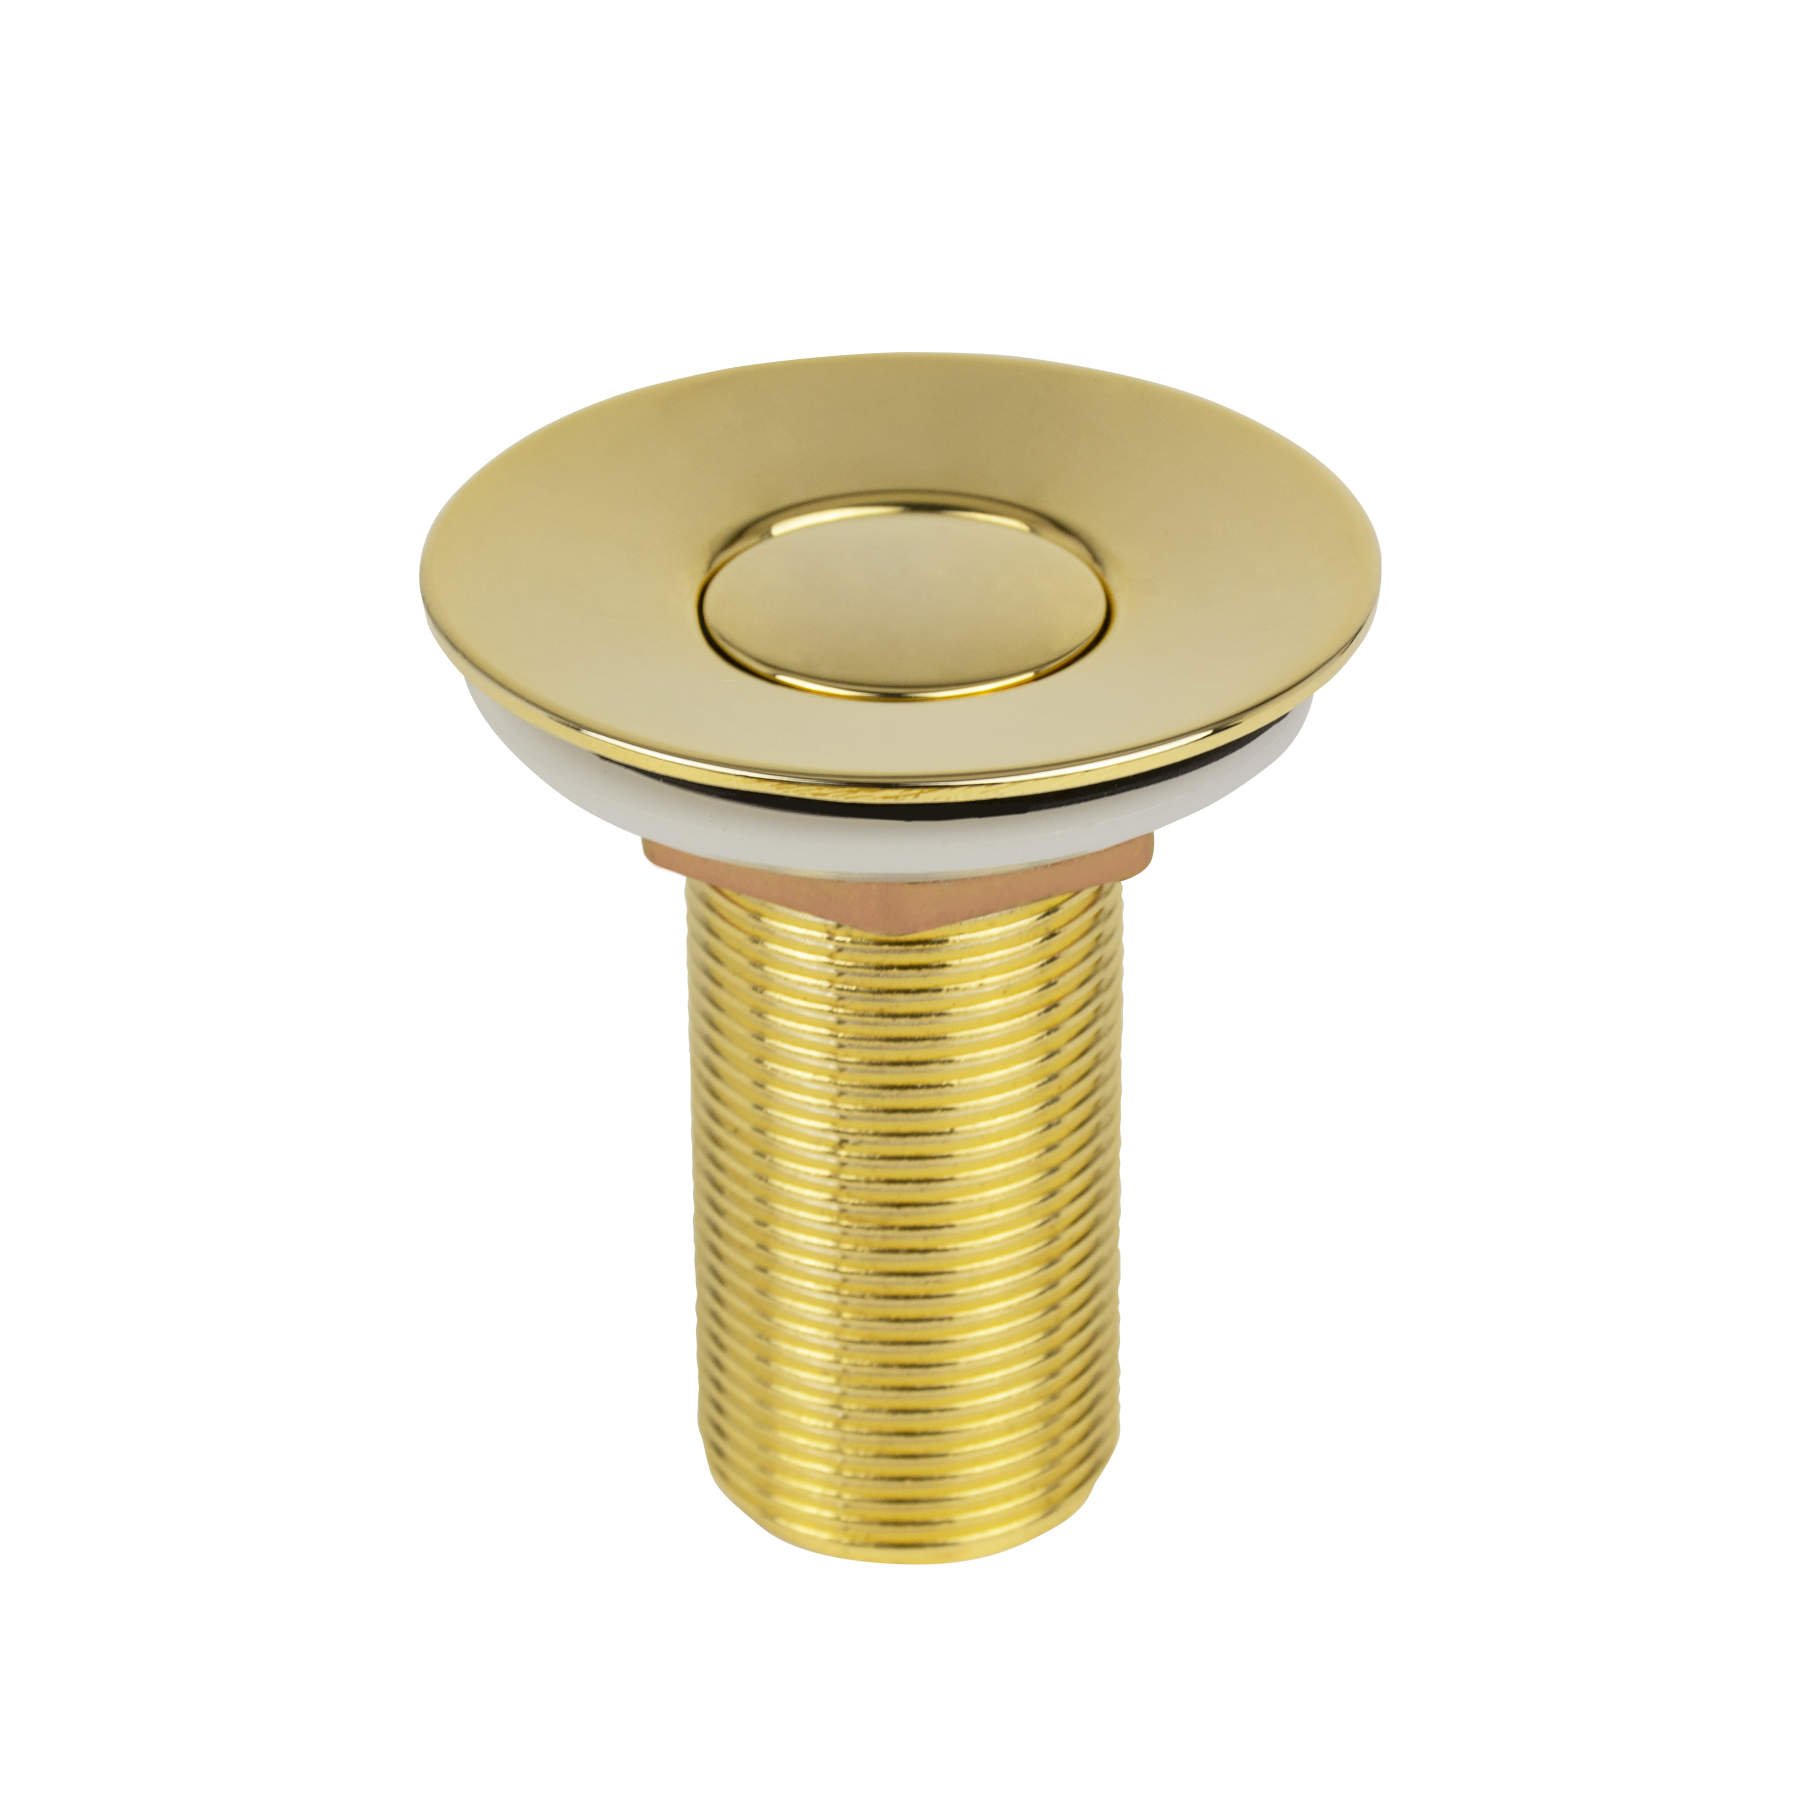 Válvula de Escoamento 7/8” Dourada para Lavatório Click Up Tampa Pequena Gold Go5221 Ducon Metais - 4